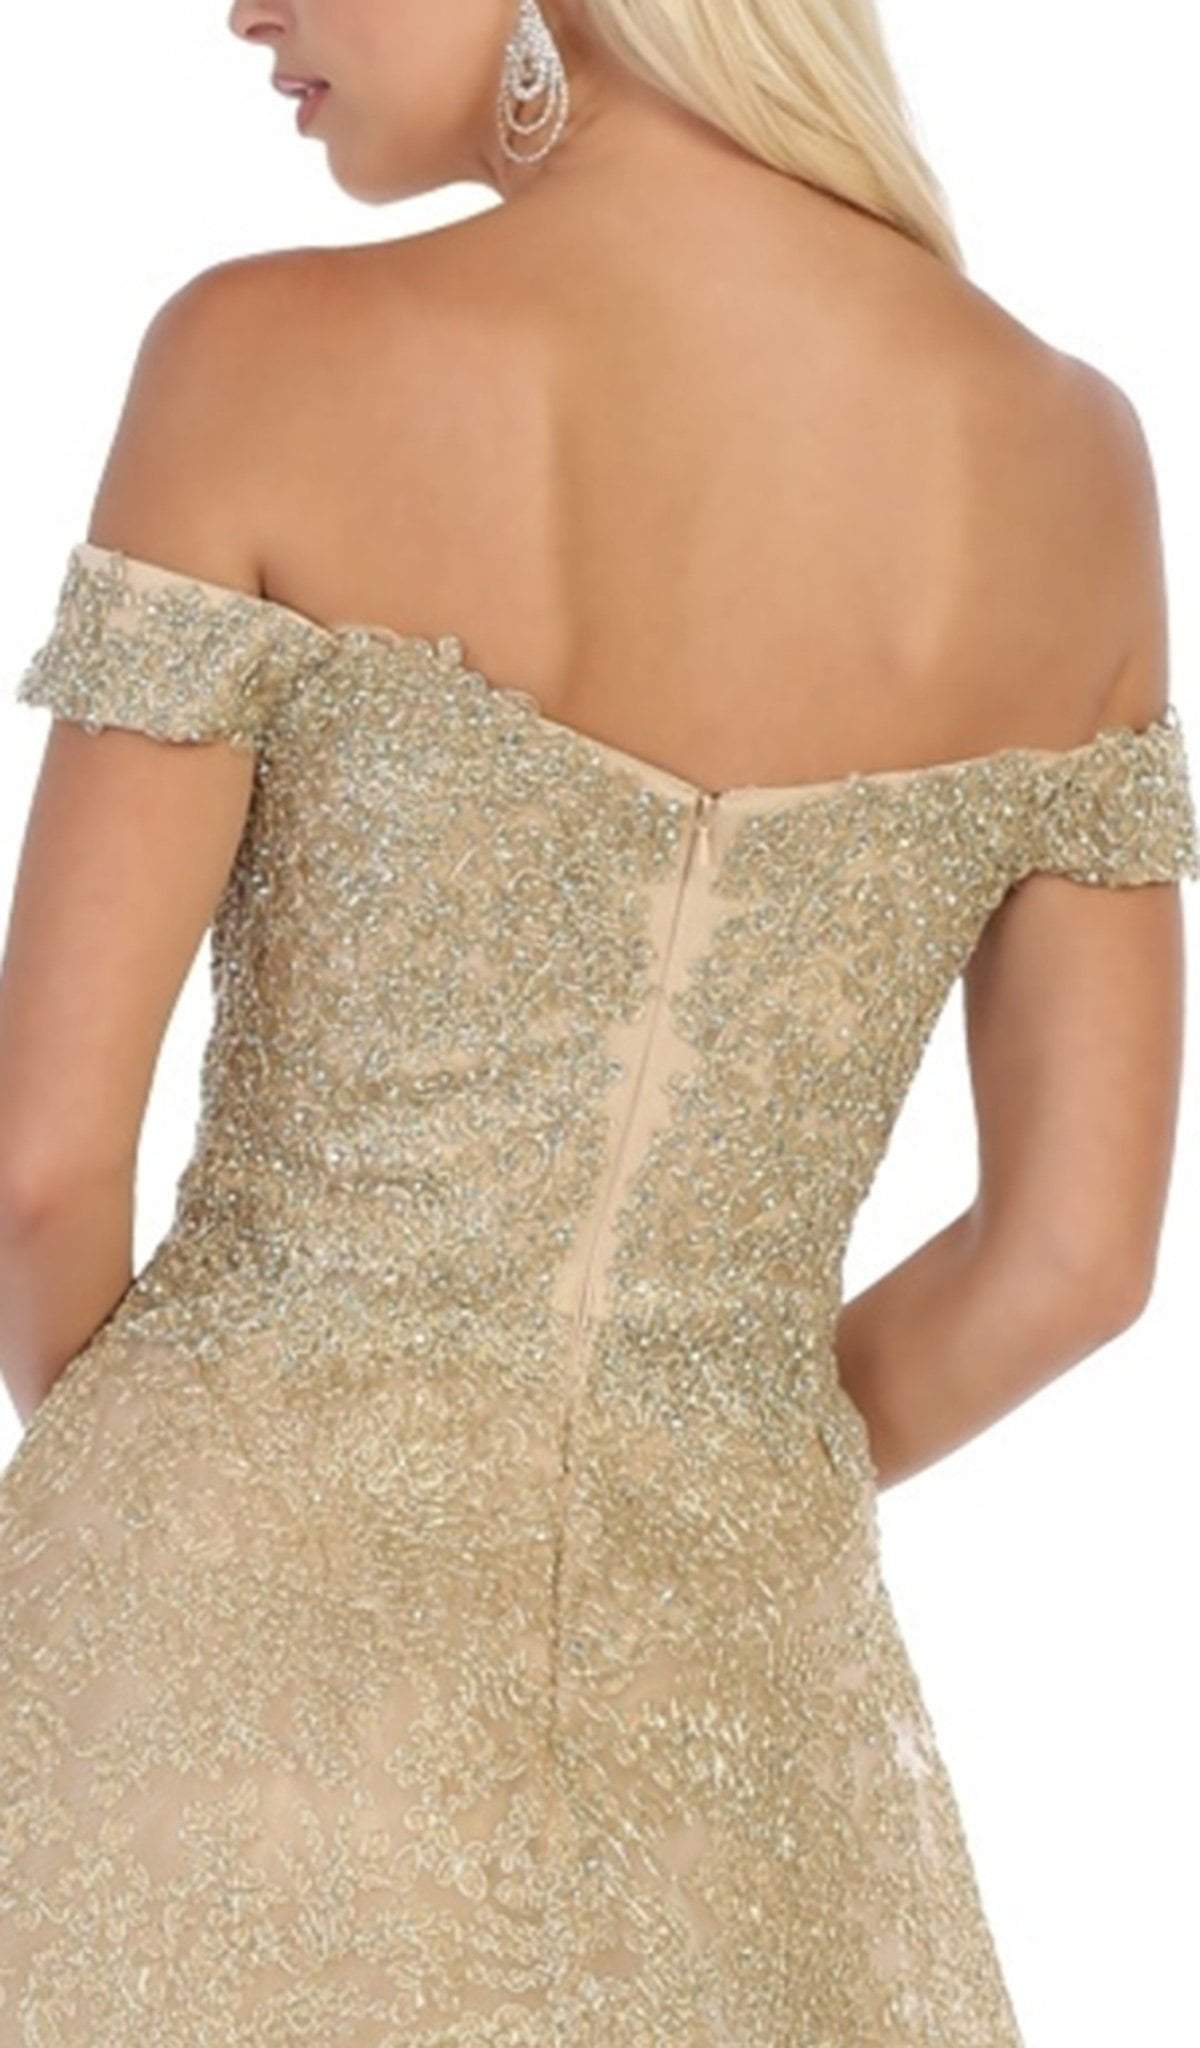 May Queen - RQ7722 Embellished Off-Shoulder A-line Dress In Gold